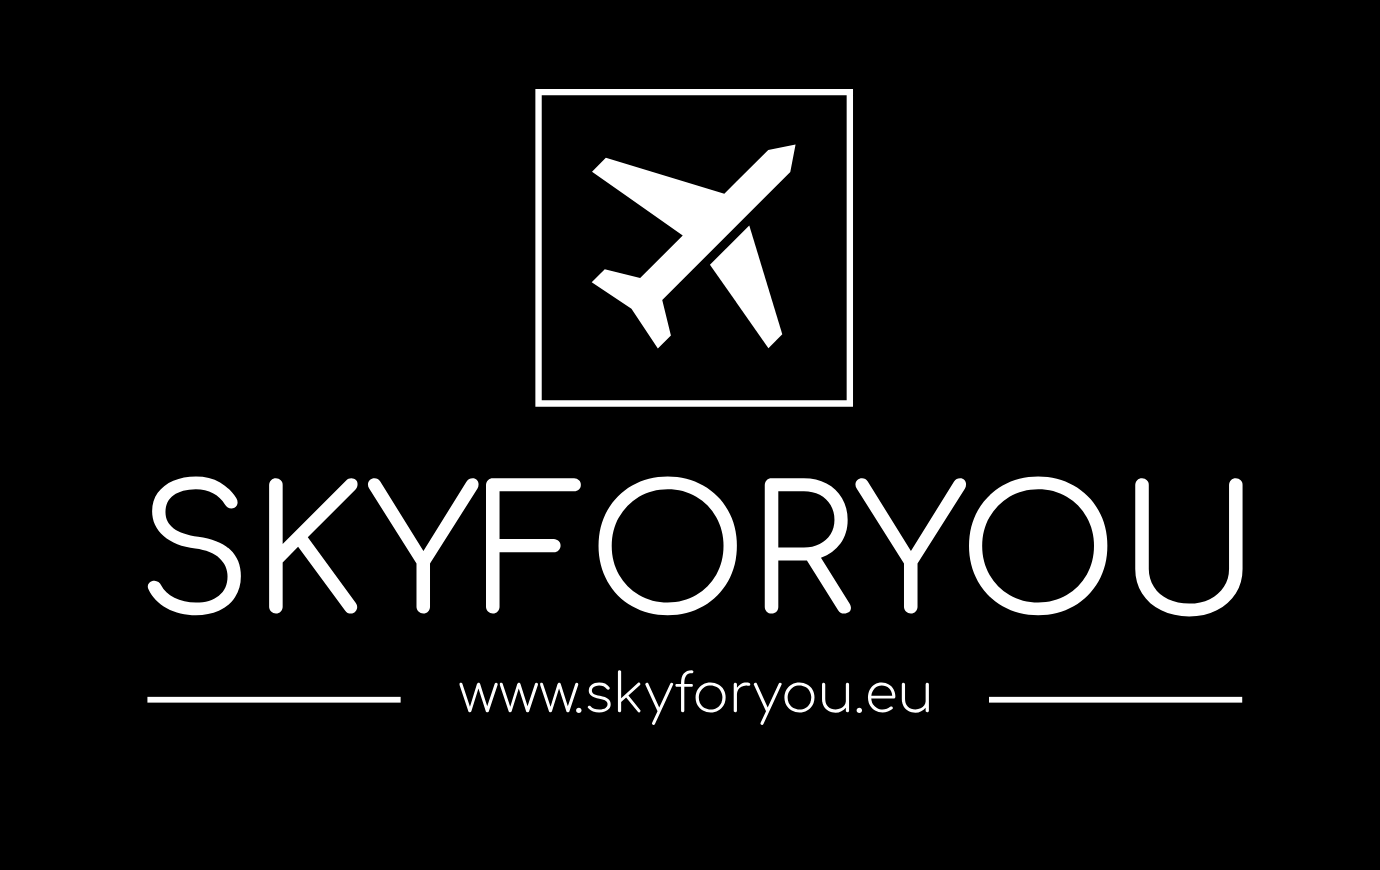 www.skyforyou.eu